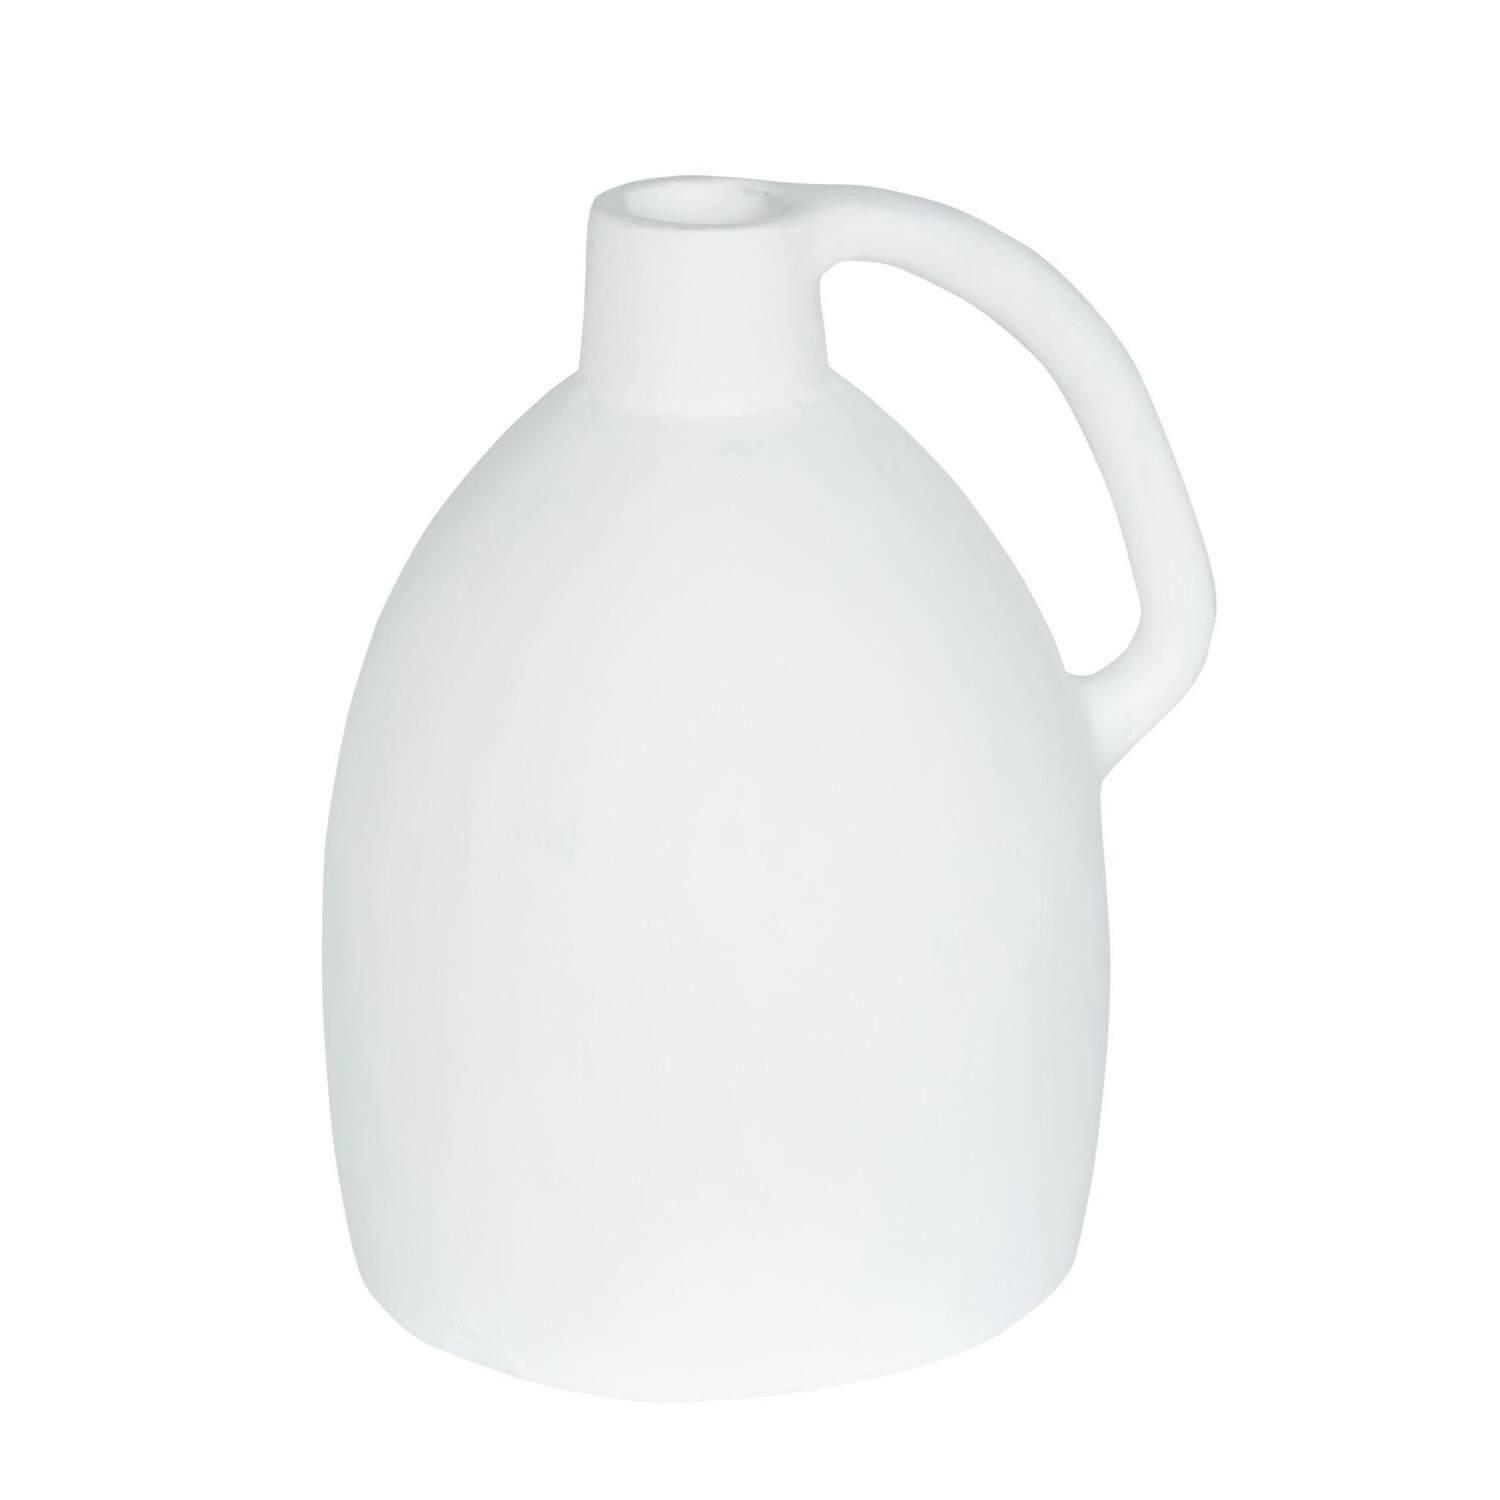 Clay Vase 11 (white)